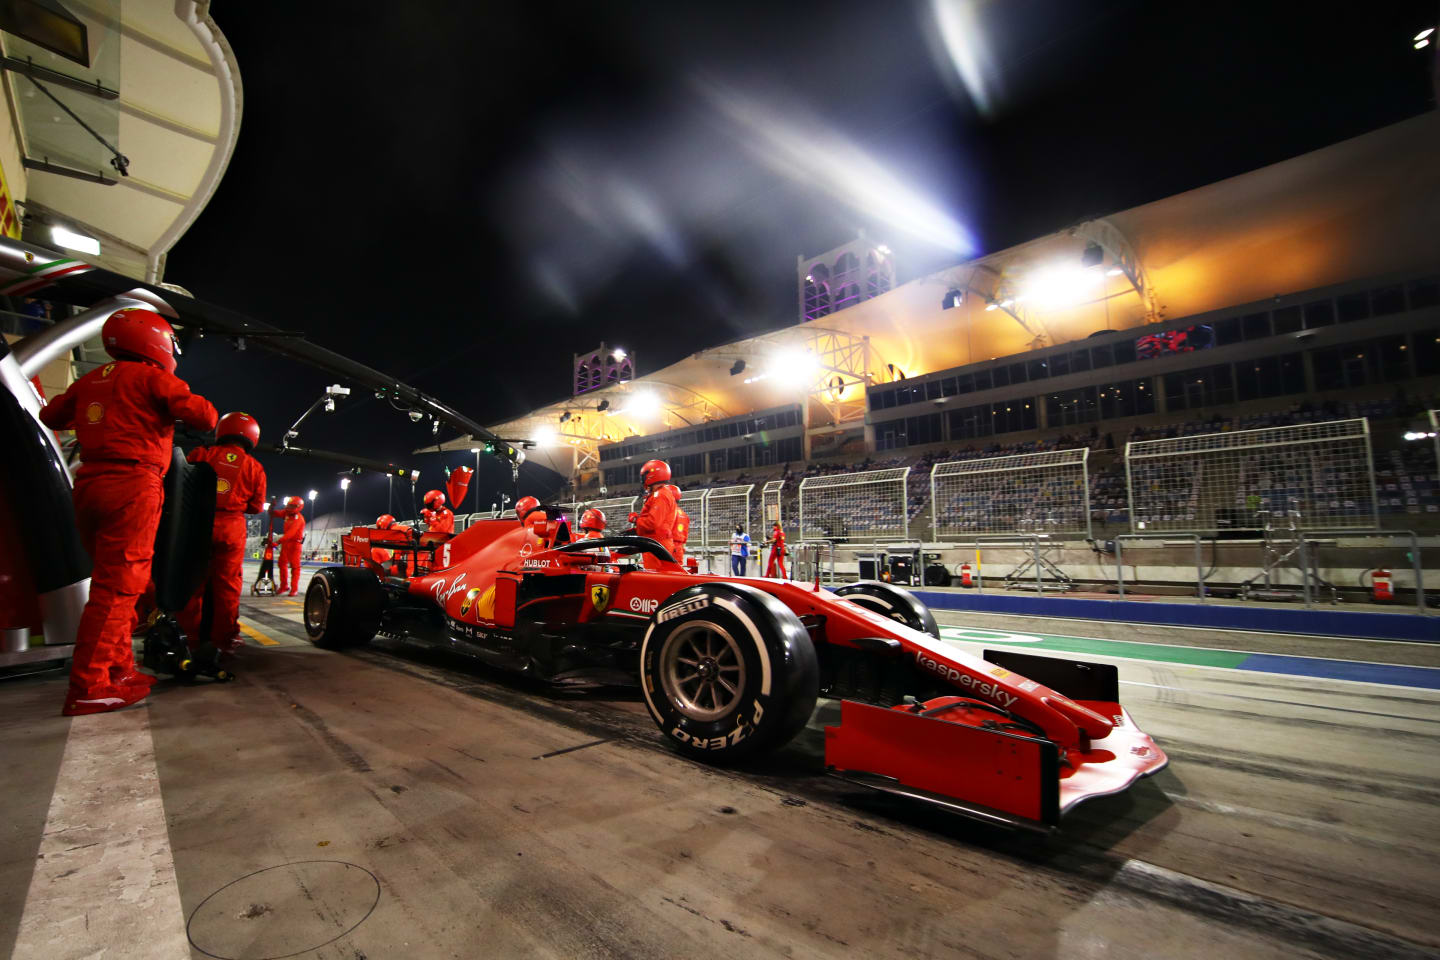 BAHRAIN, BAHRAIN - NOVEMBER 29: Sebastian Vettel of Germany driving the (5) Scuderia Ferrari SF1000 makes a pitstop during the F1 Grand Prix of Bahrain at Bahrain International Circuit on November 29, 2020 in Bahrain, Bahrain. (Photo by Mark Thompson/Getty Images)